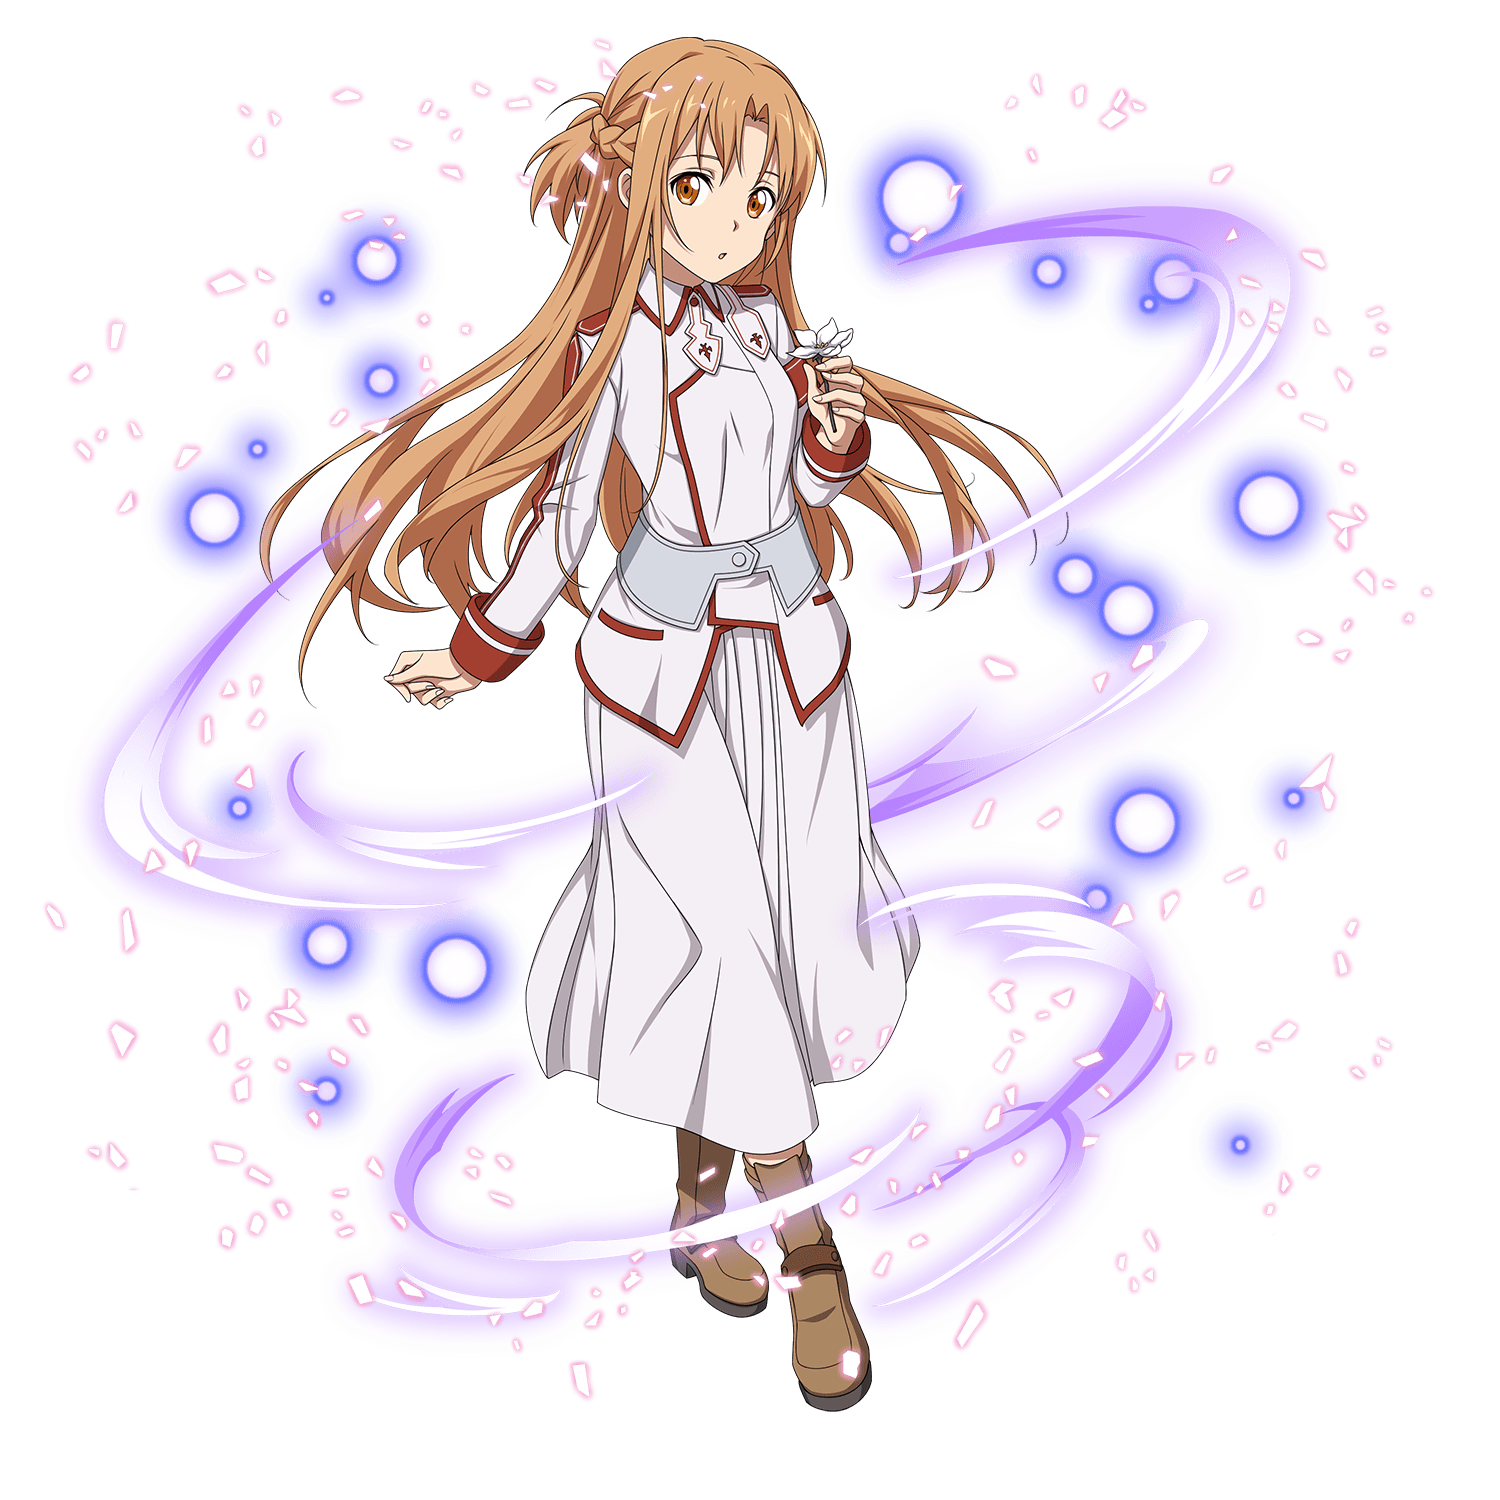 Asuna (Sword Art Online) - Wikipedia